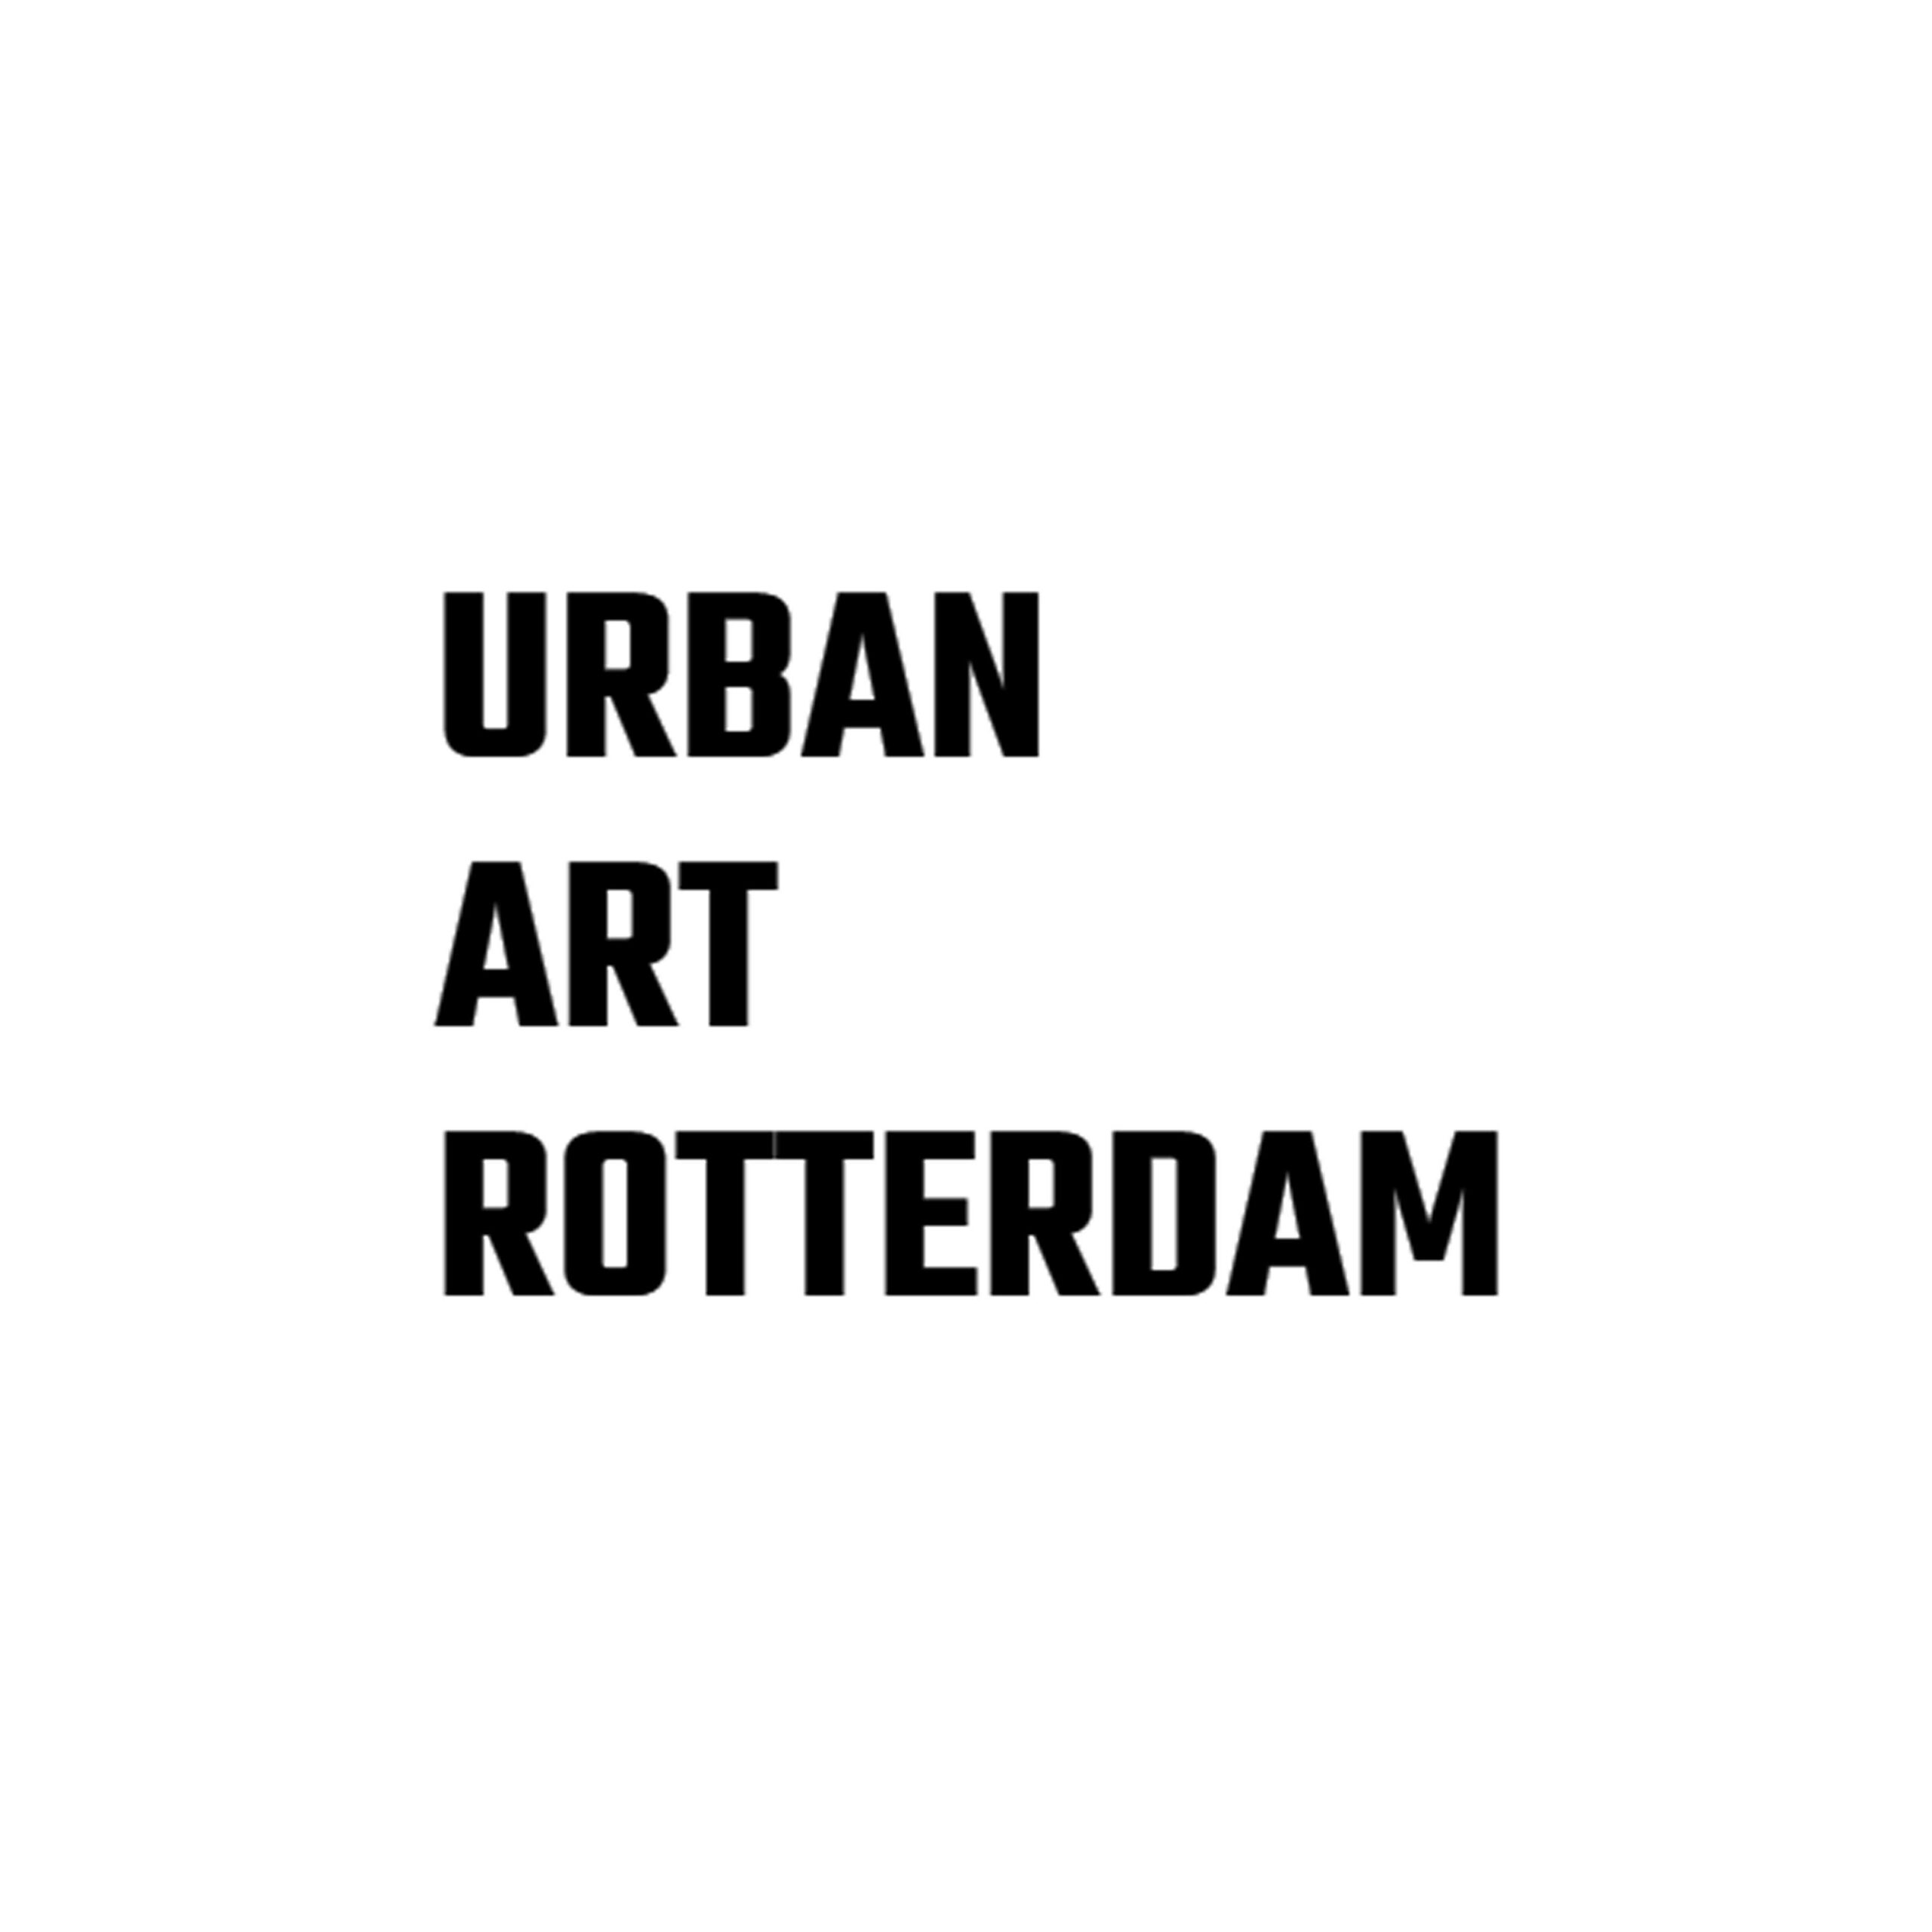 Urban Art Gallery Rotterdam